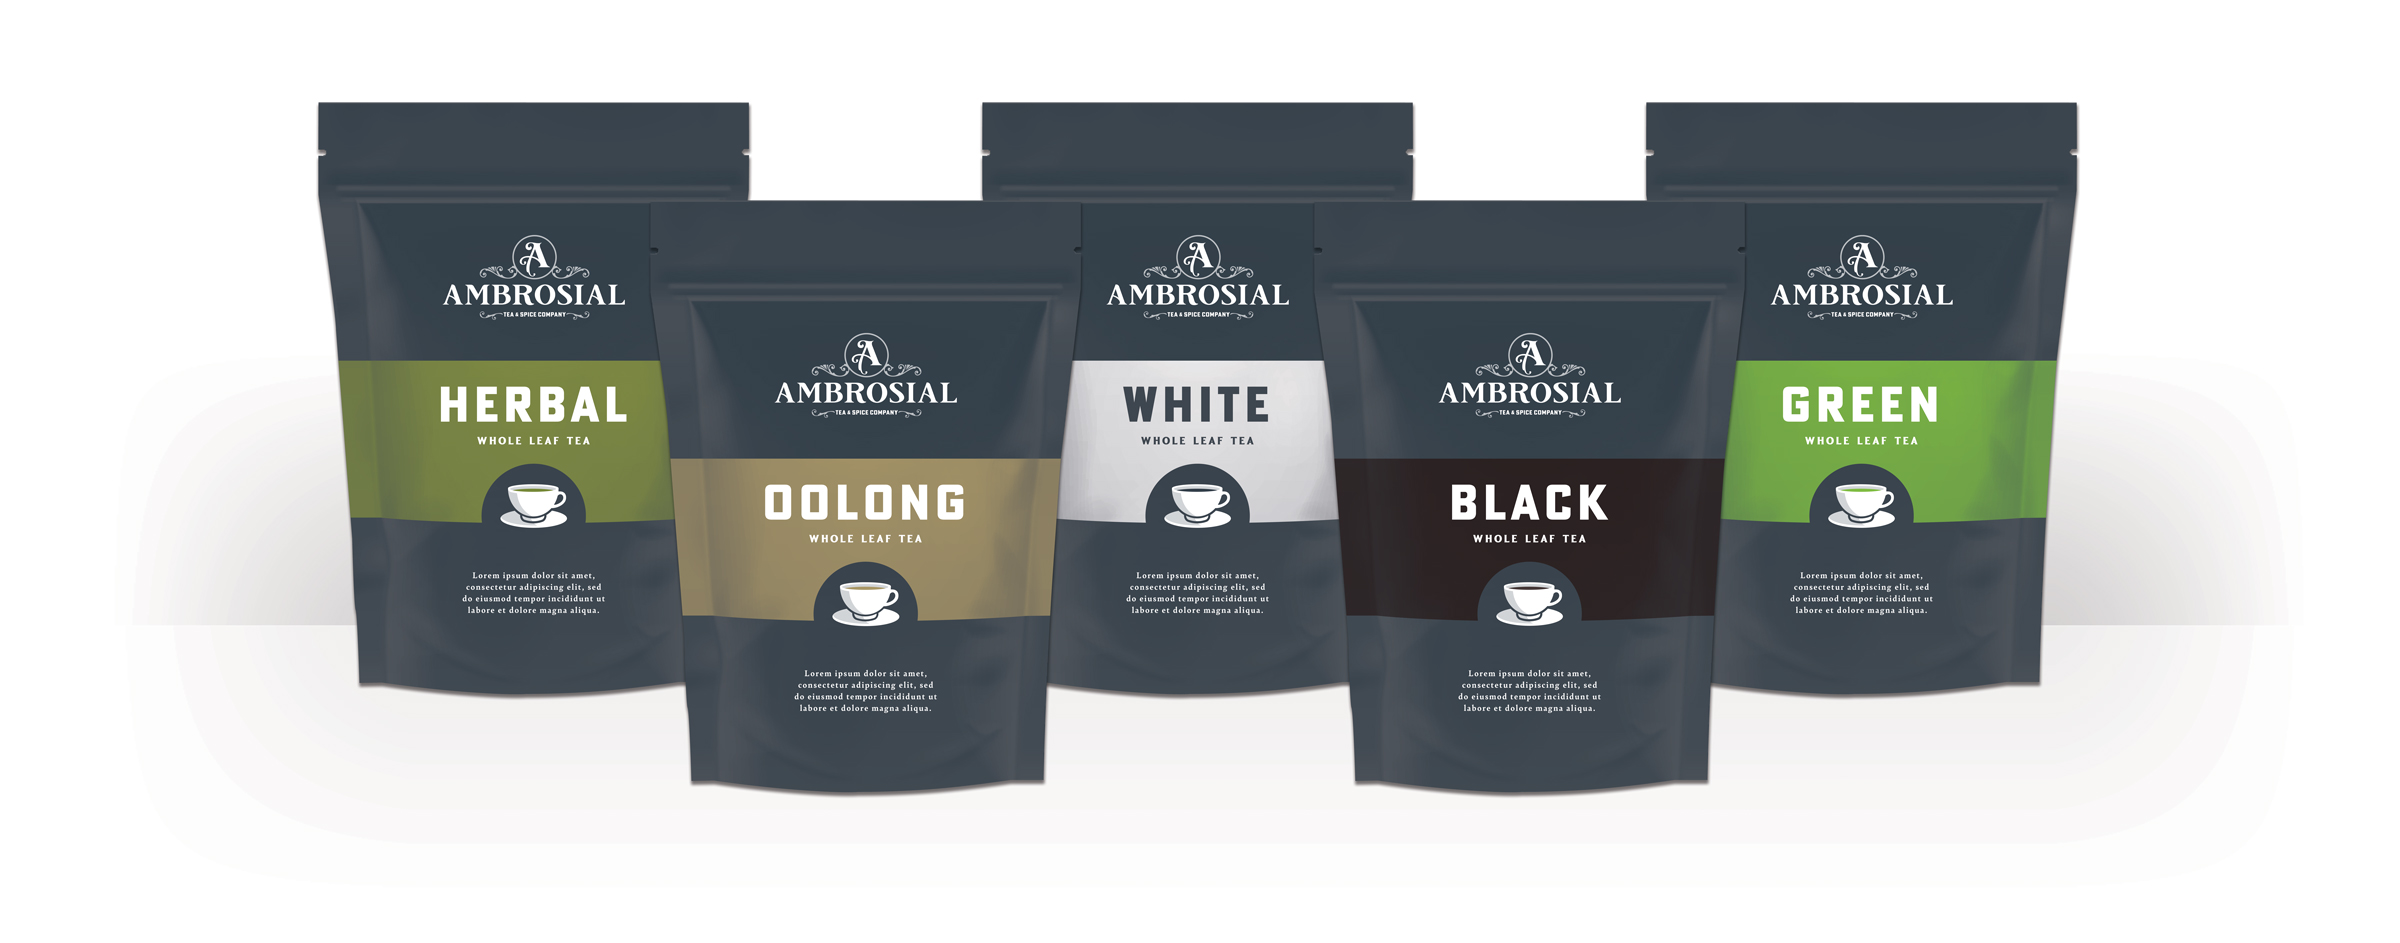 ambrosial tea bags